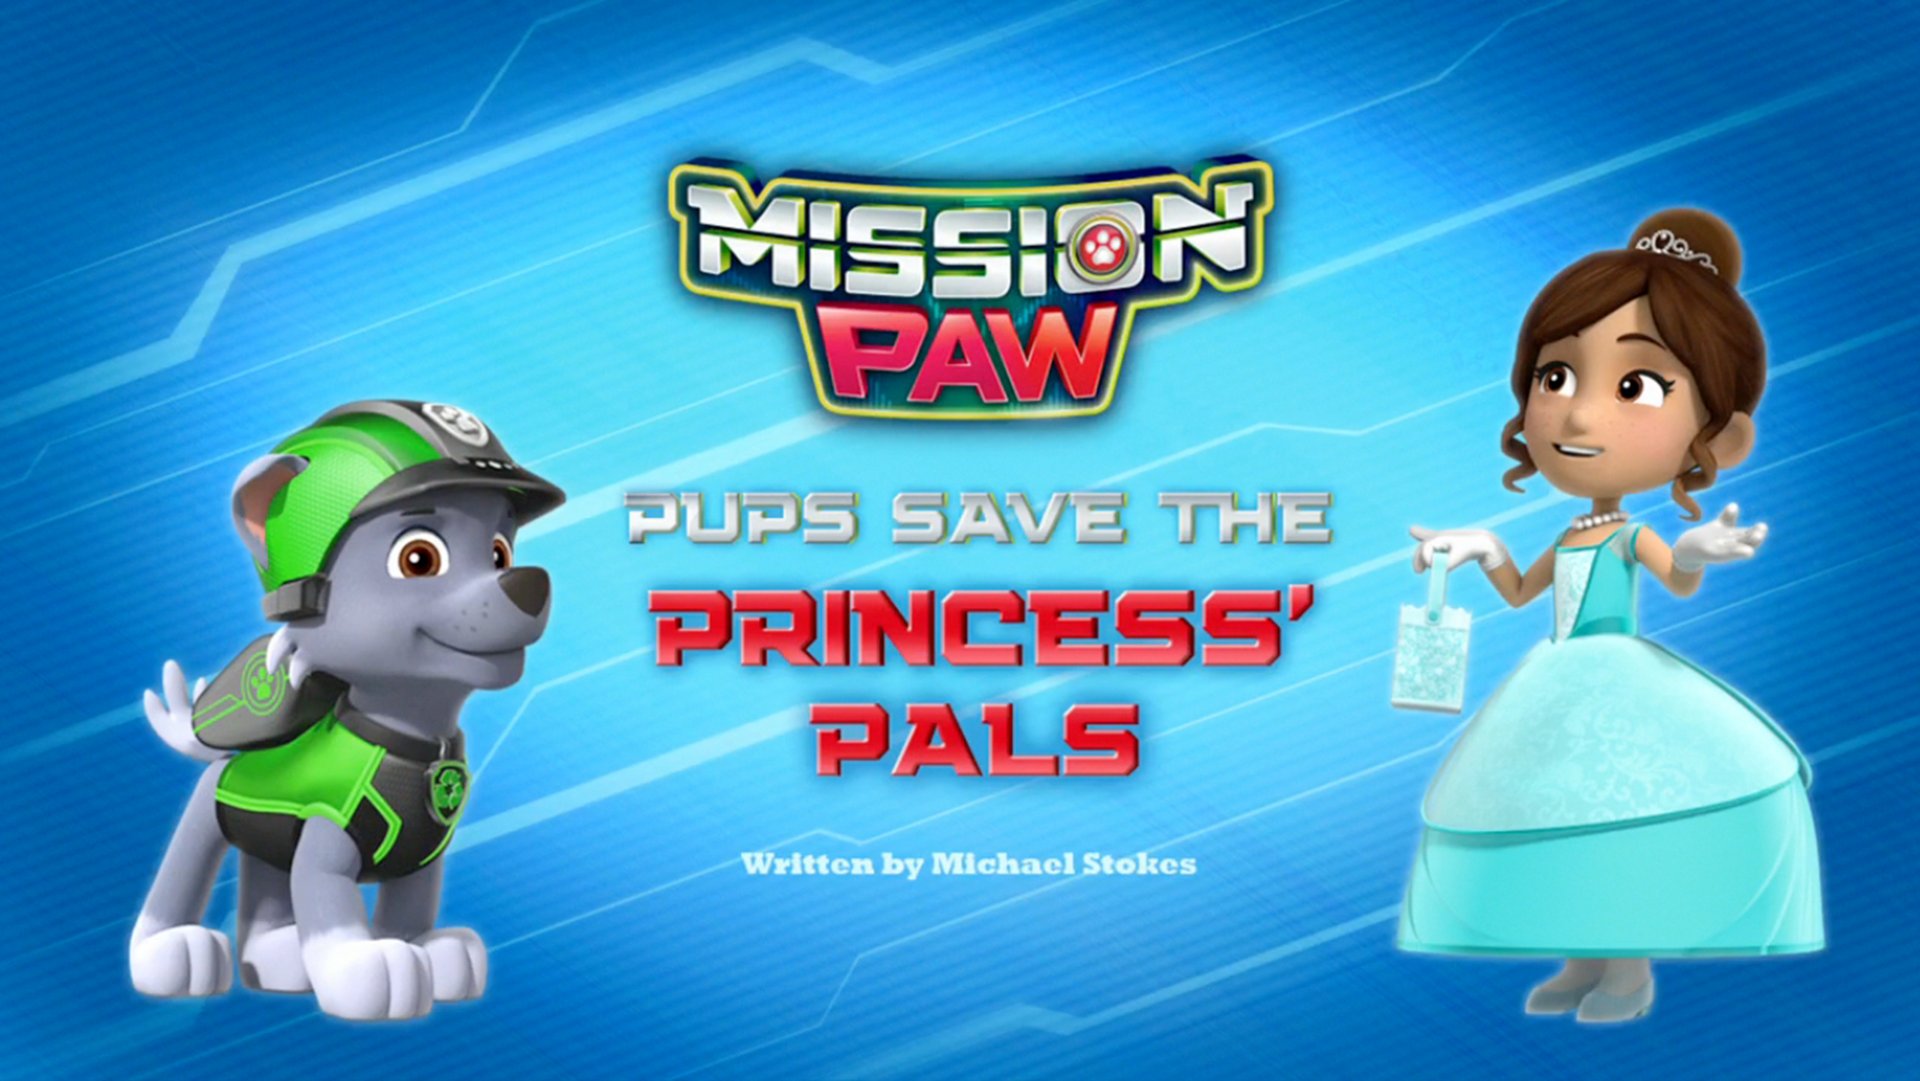 Boost international Kom op Mission PAW: Pups Save the Princess' Pals | PAW Patrol Wiki | Fandom